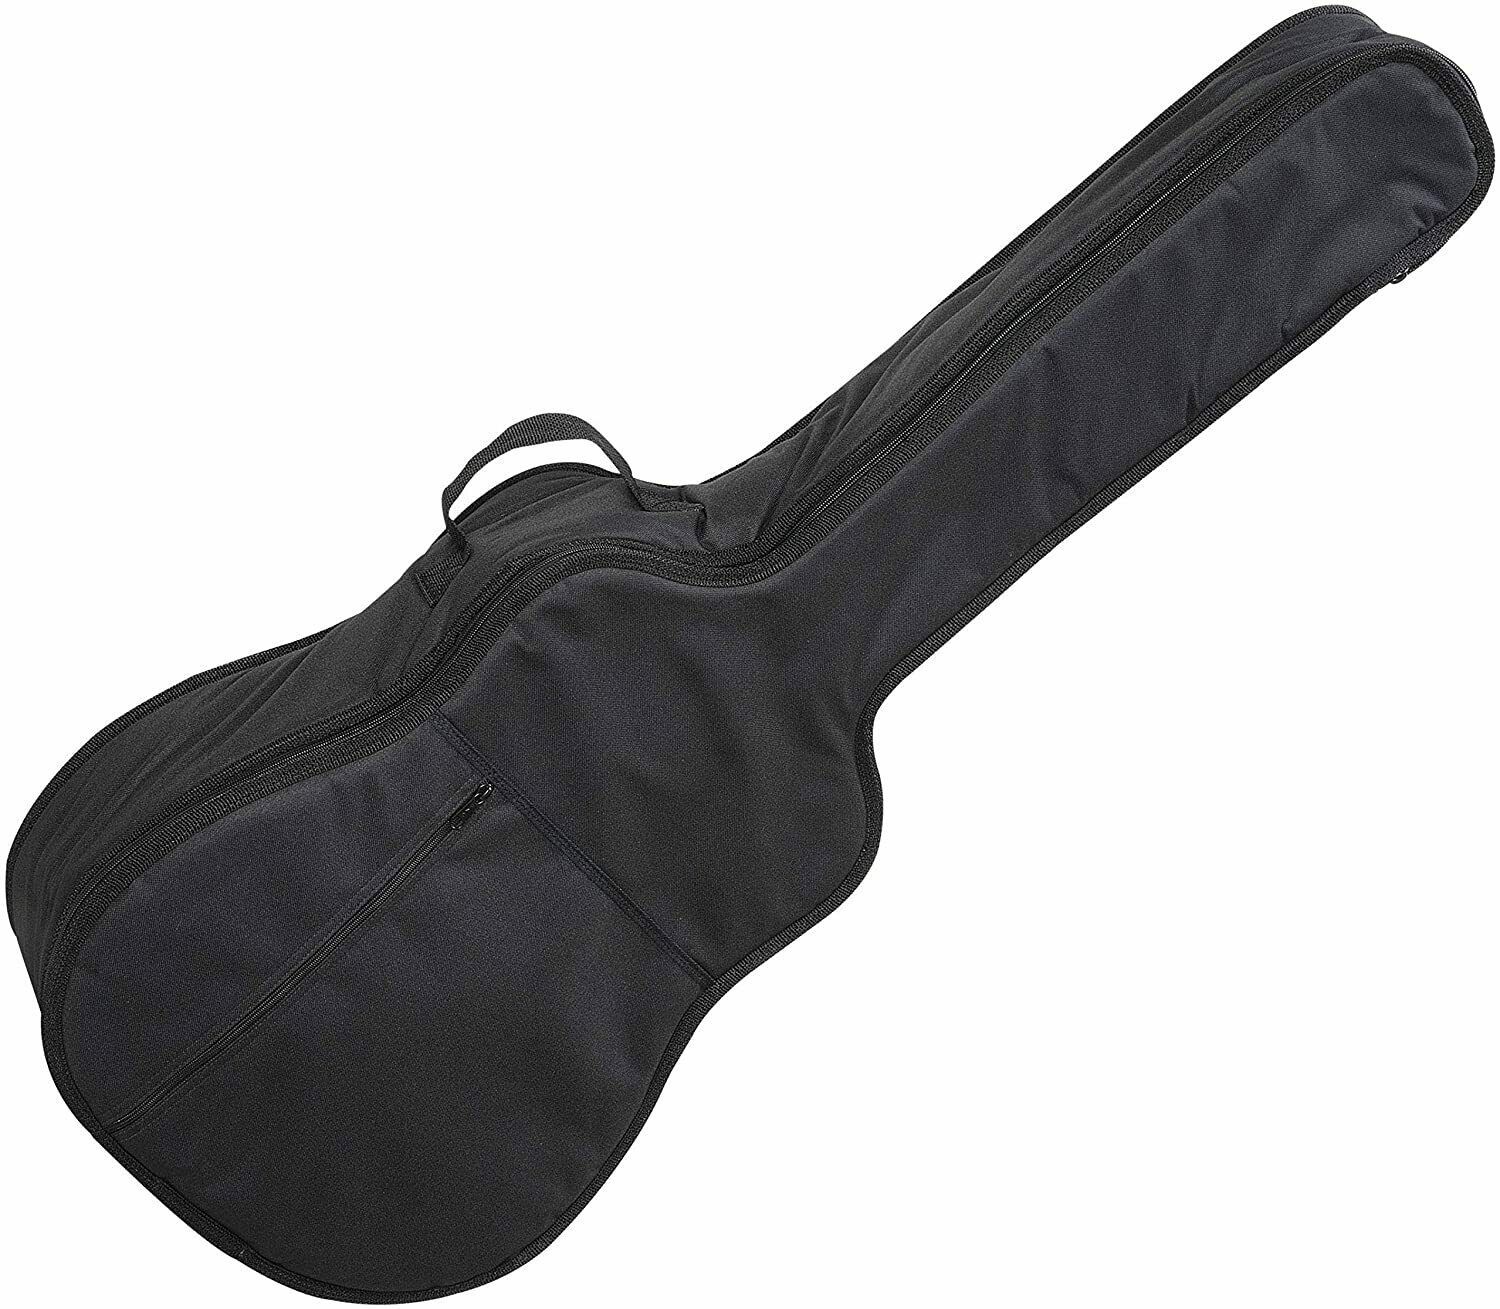 Levy's - EM20 - Deluxe Polyester Acoustic Guitar Bag - Black - $49.95